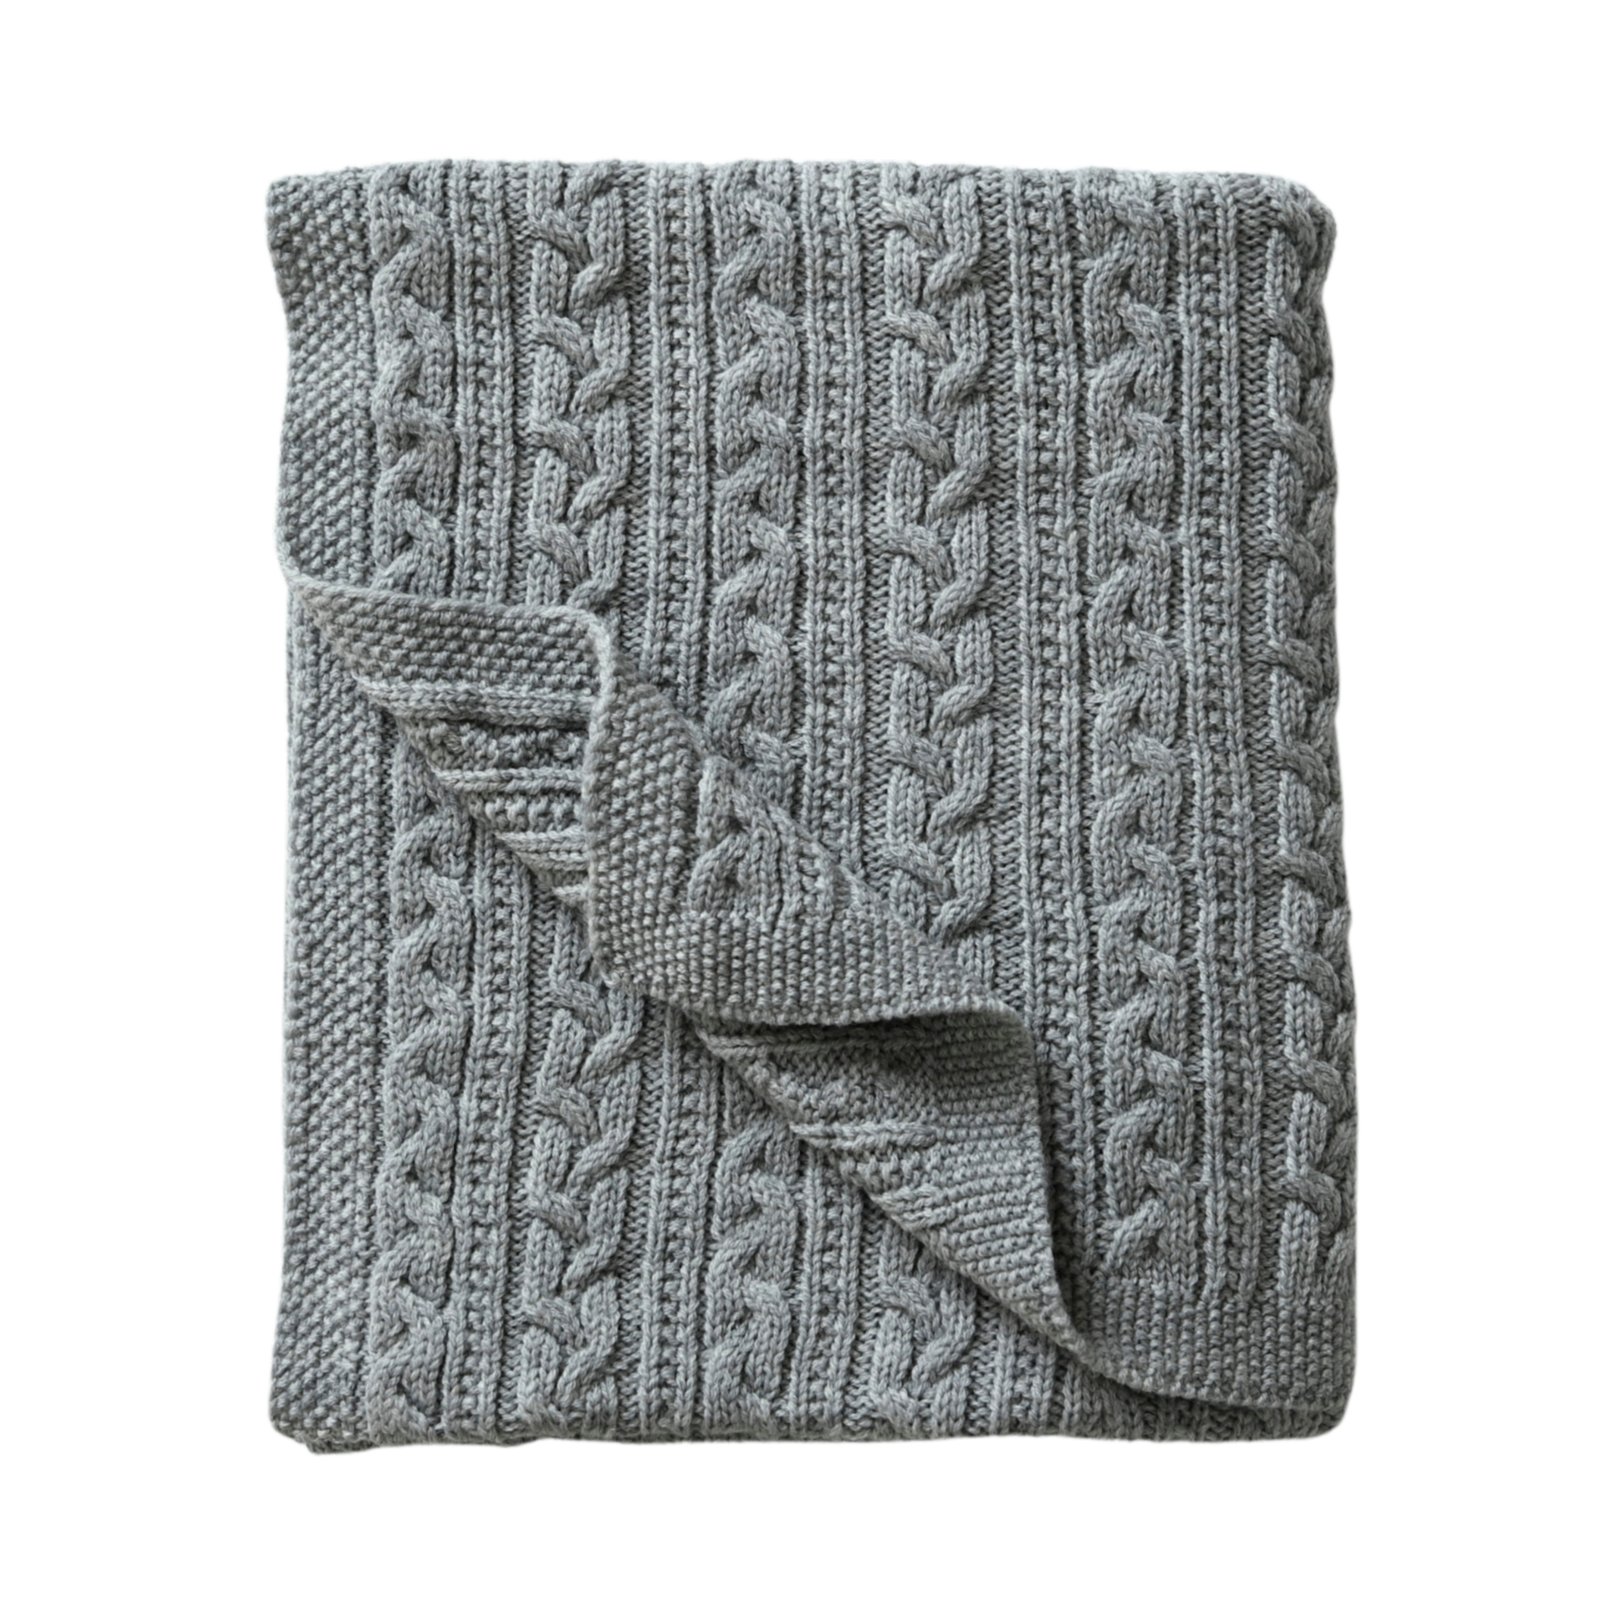 Jack o Juno Knitted Merino Wool Blanket Light Grey